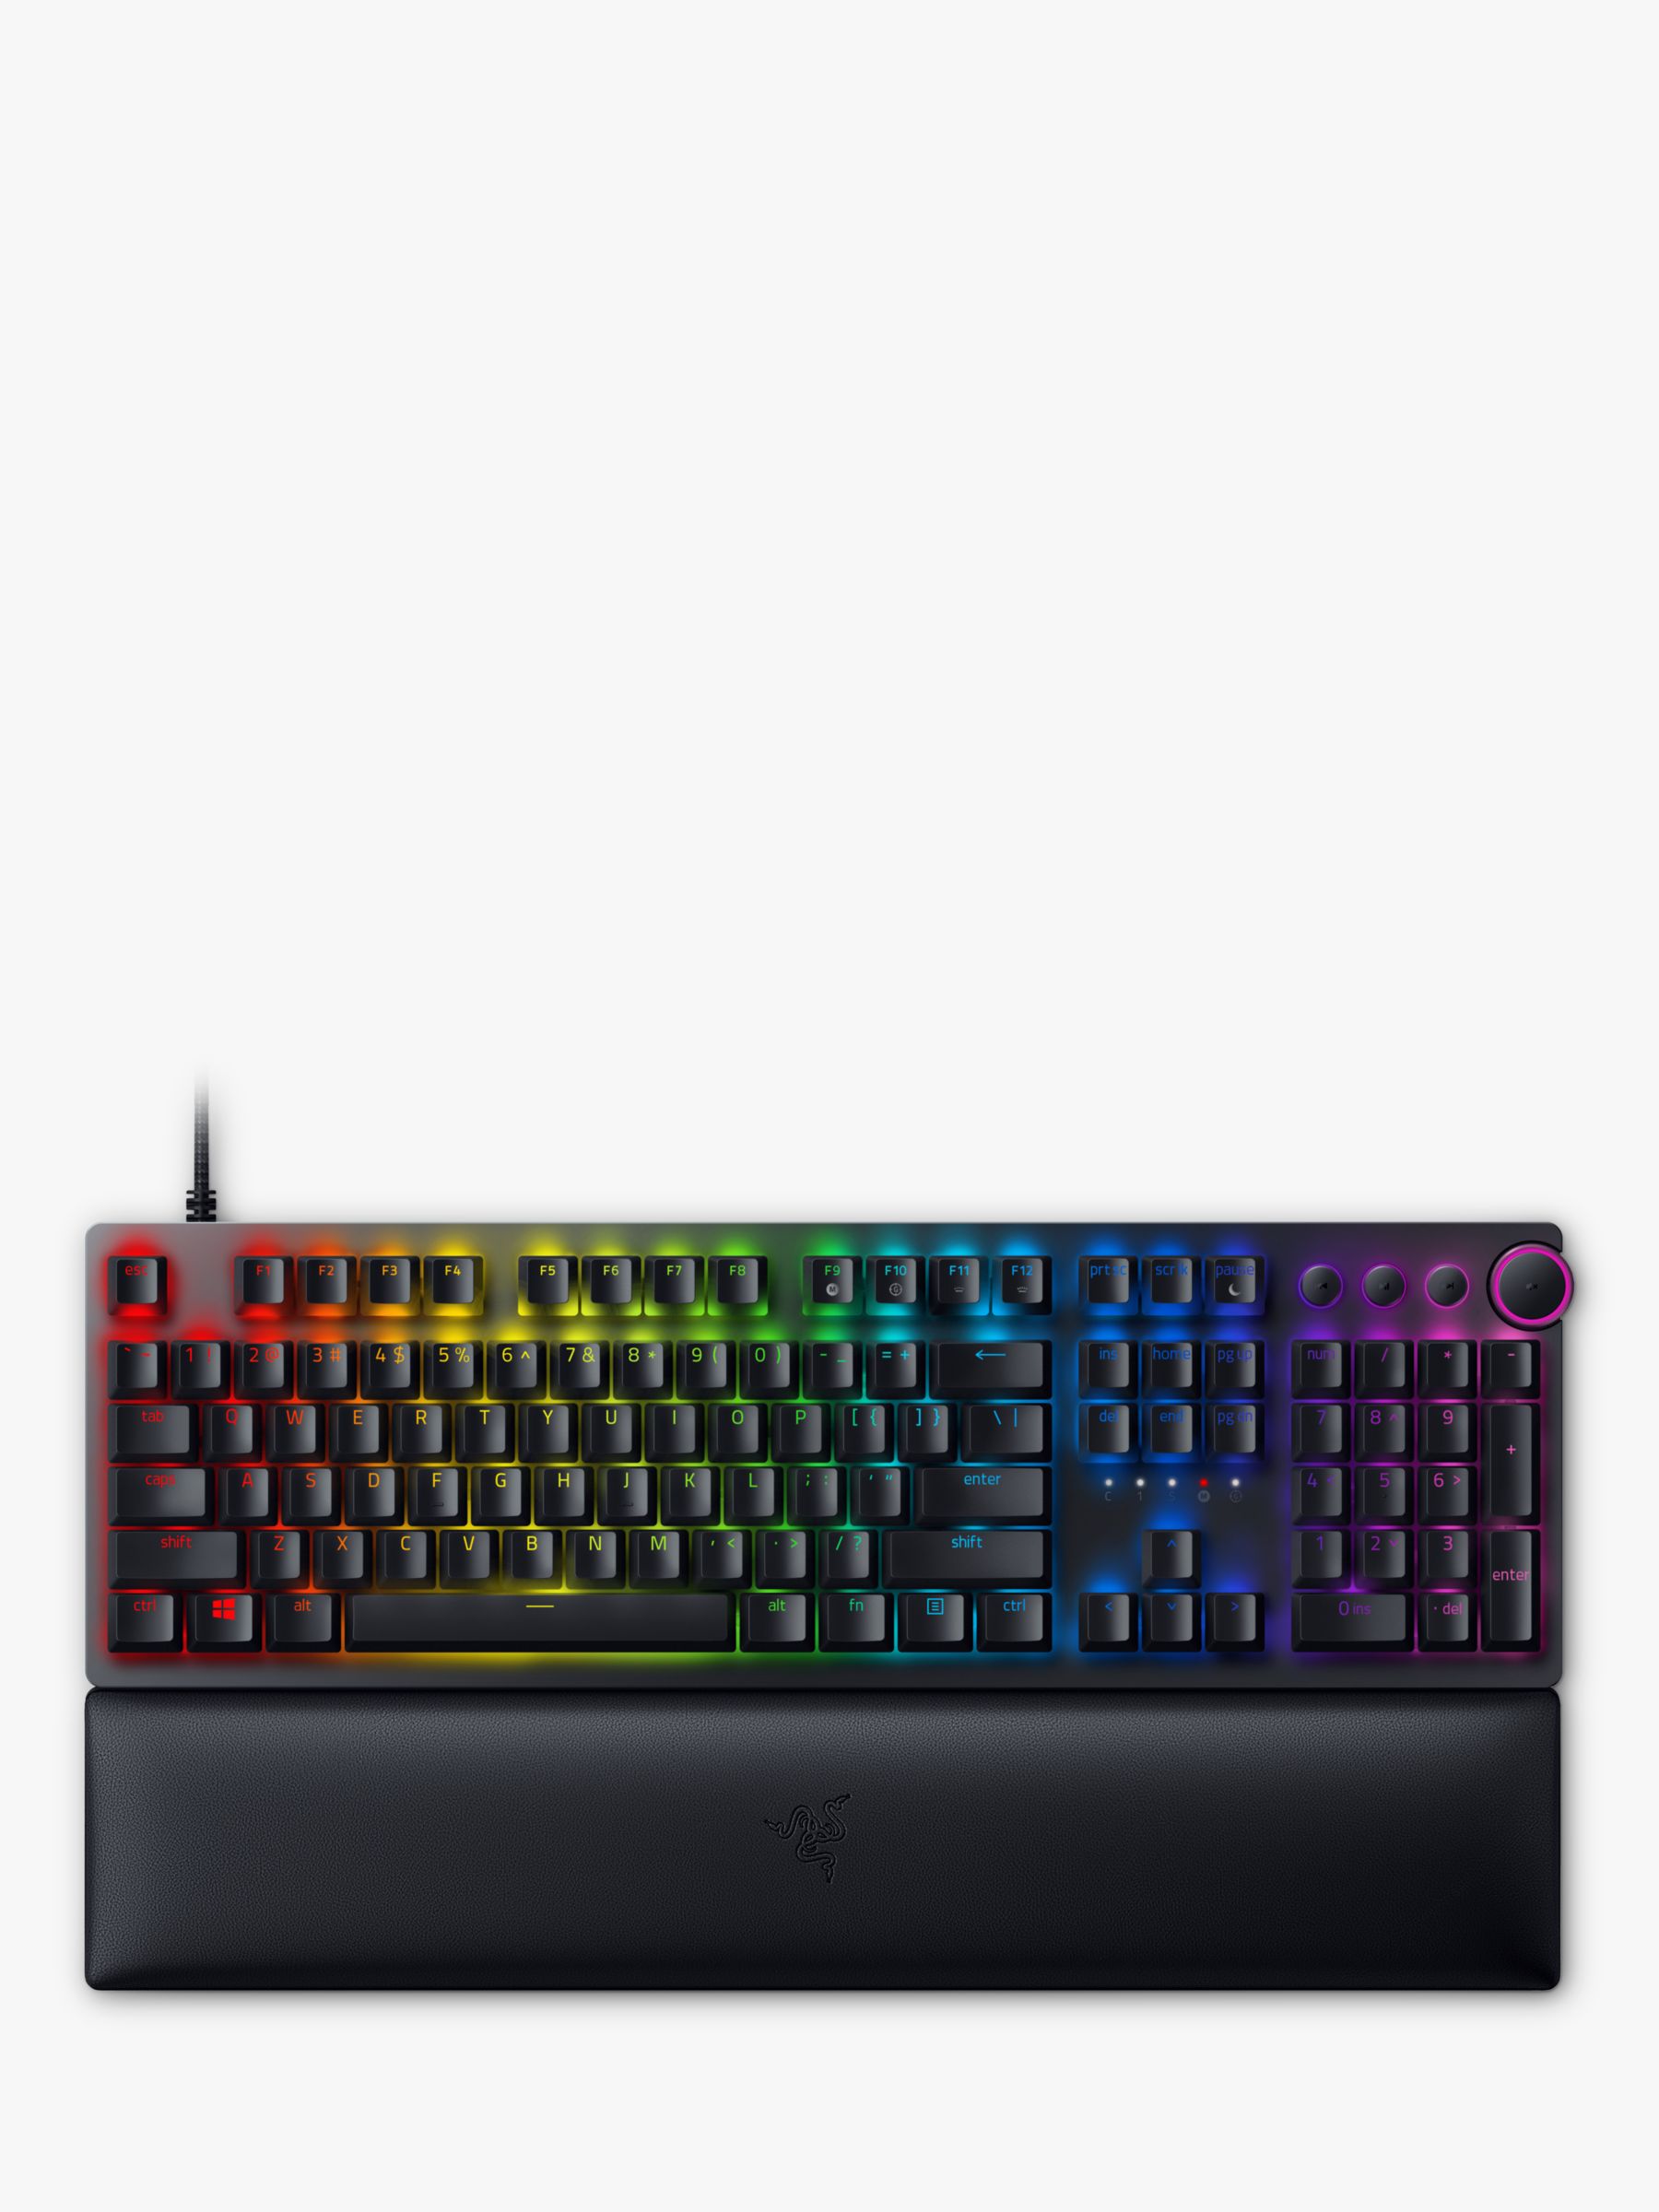 Razer Huntsman V2 Wired RGB Mechanical Gaming Keyboard, £199.99